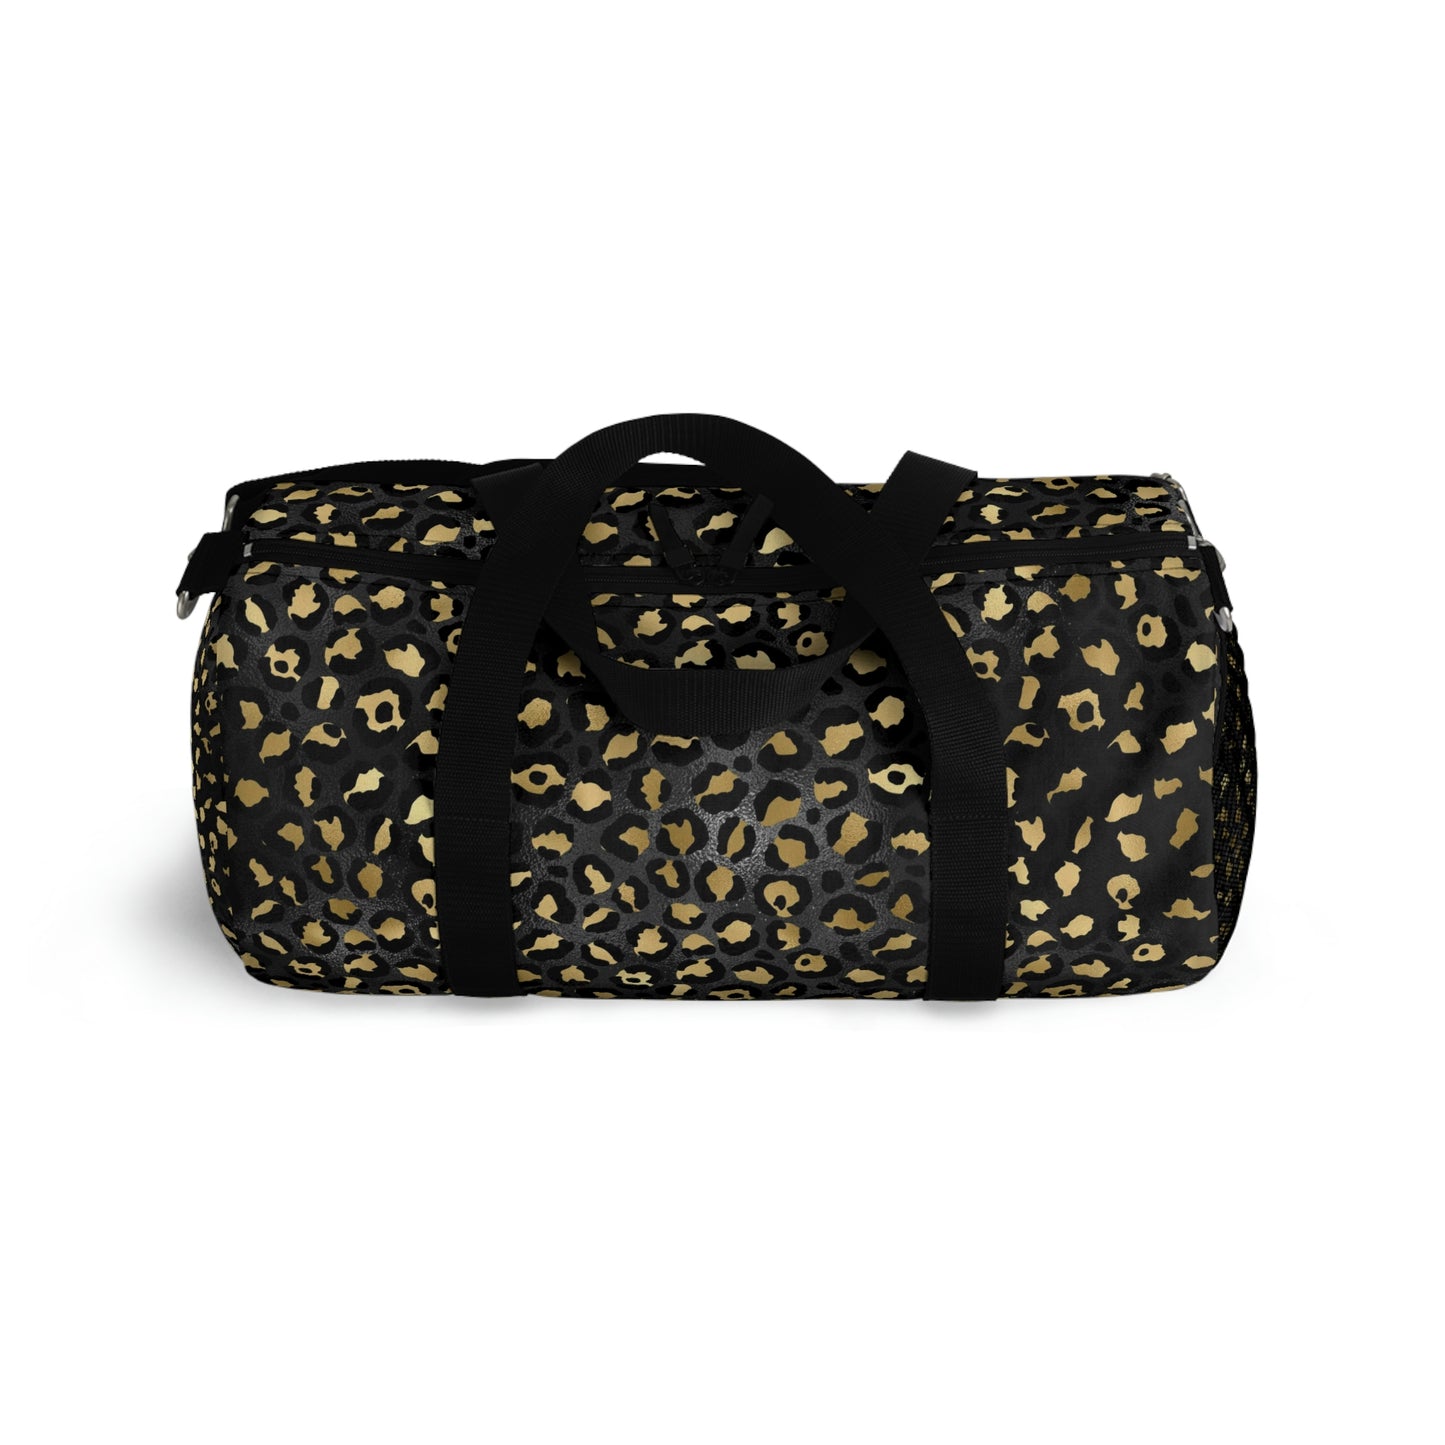 Leopard Print Duffle Bag, Weekender Duffle Bag, Carry-on Travel Overnight Canvas Duffel Bag